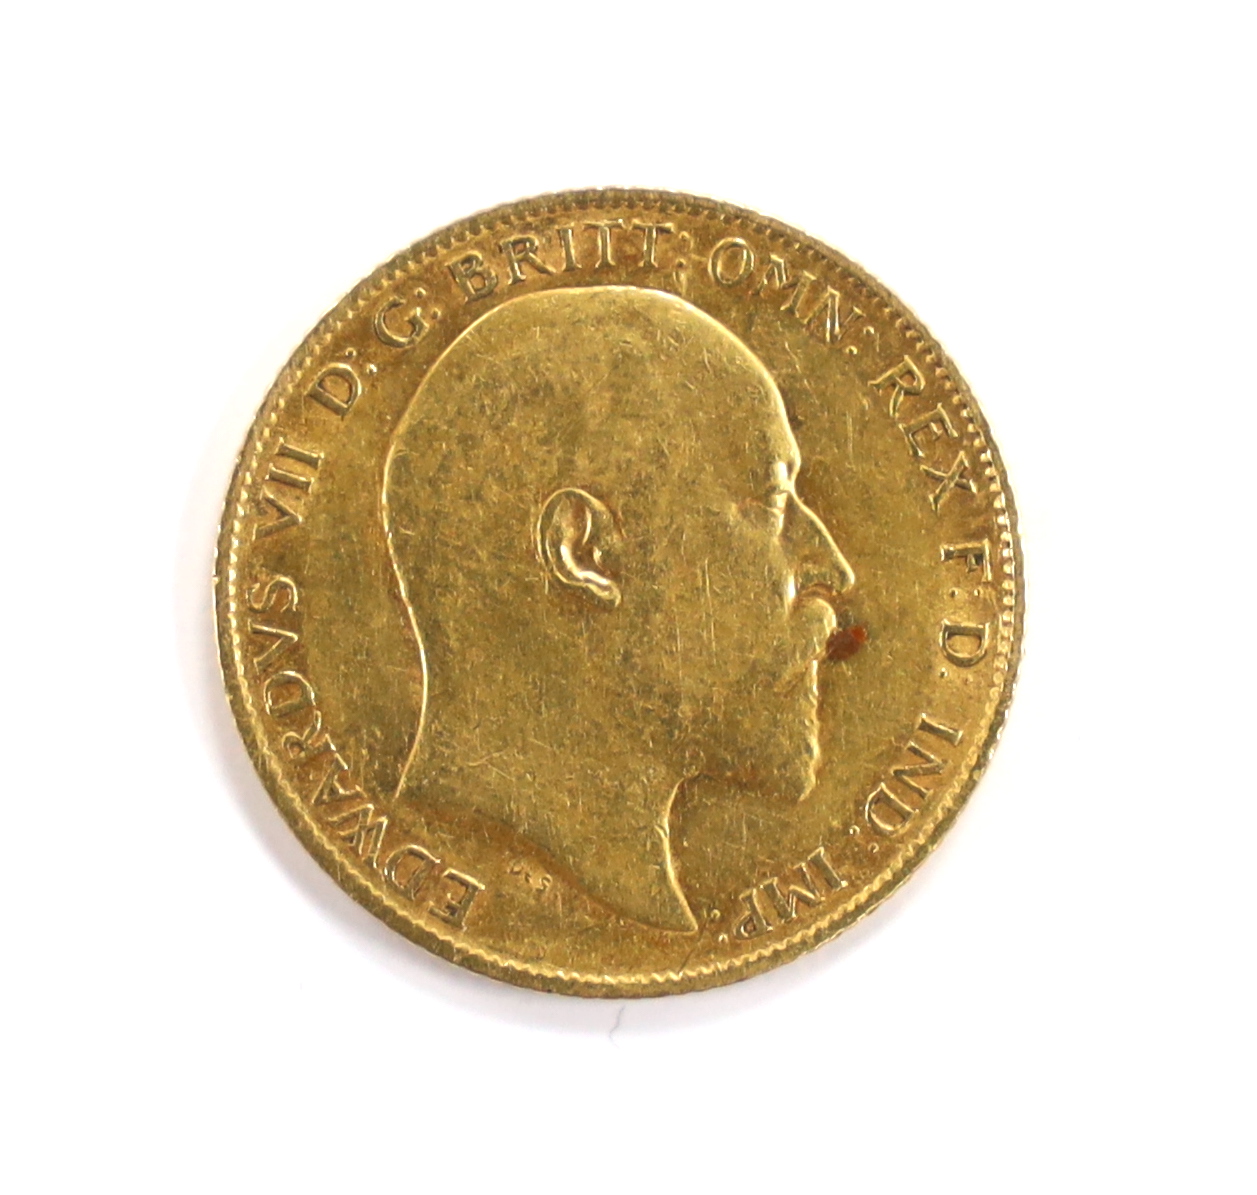 British gold coins, An Edward VII gold half sovereign, 1907, about VF